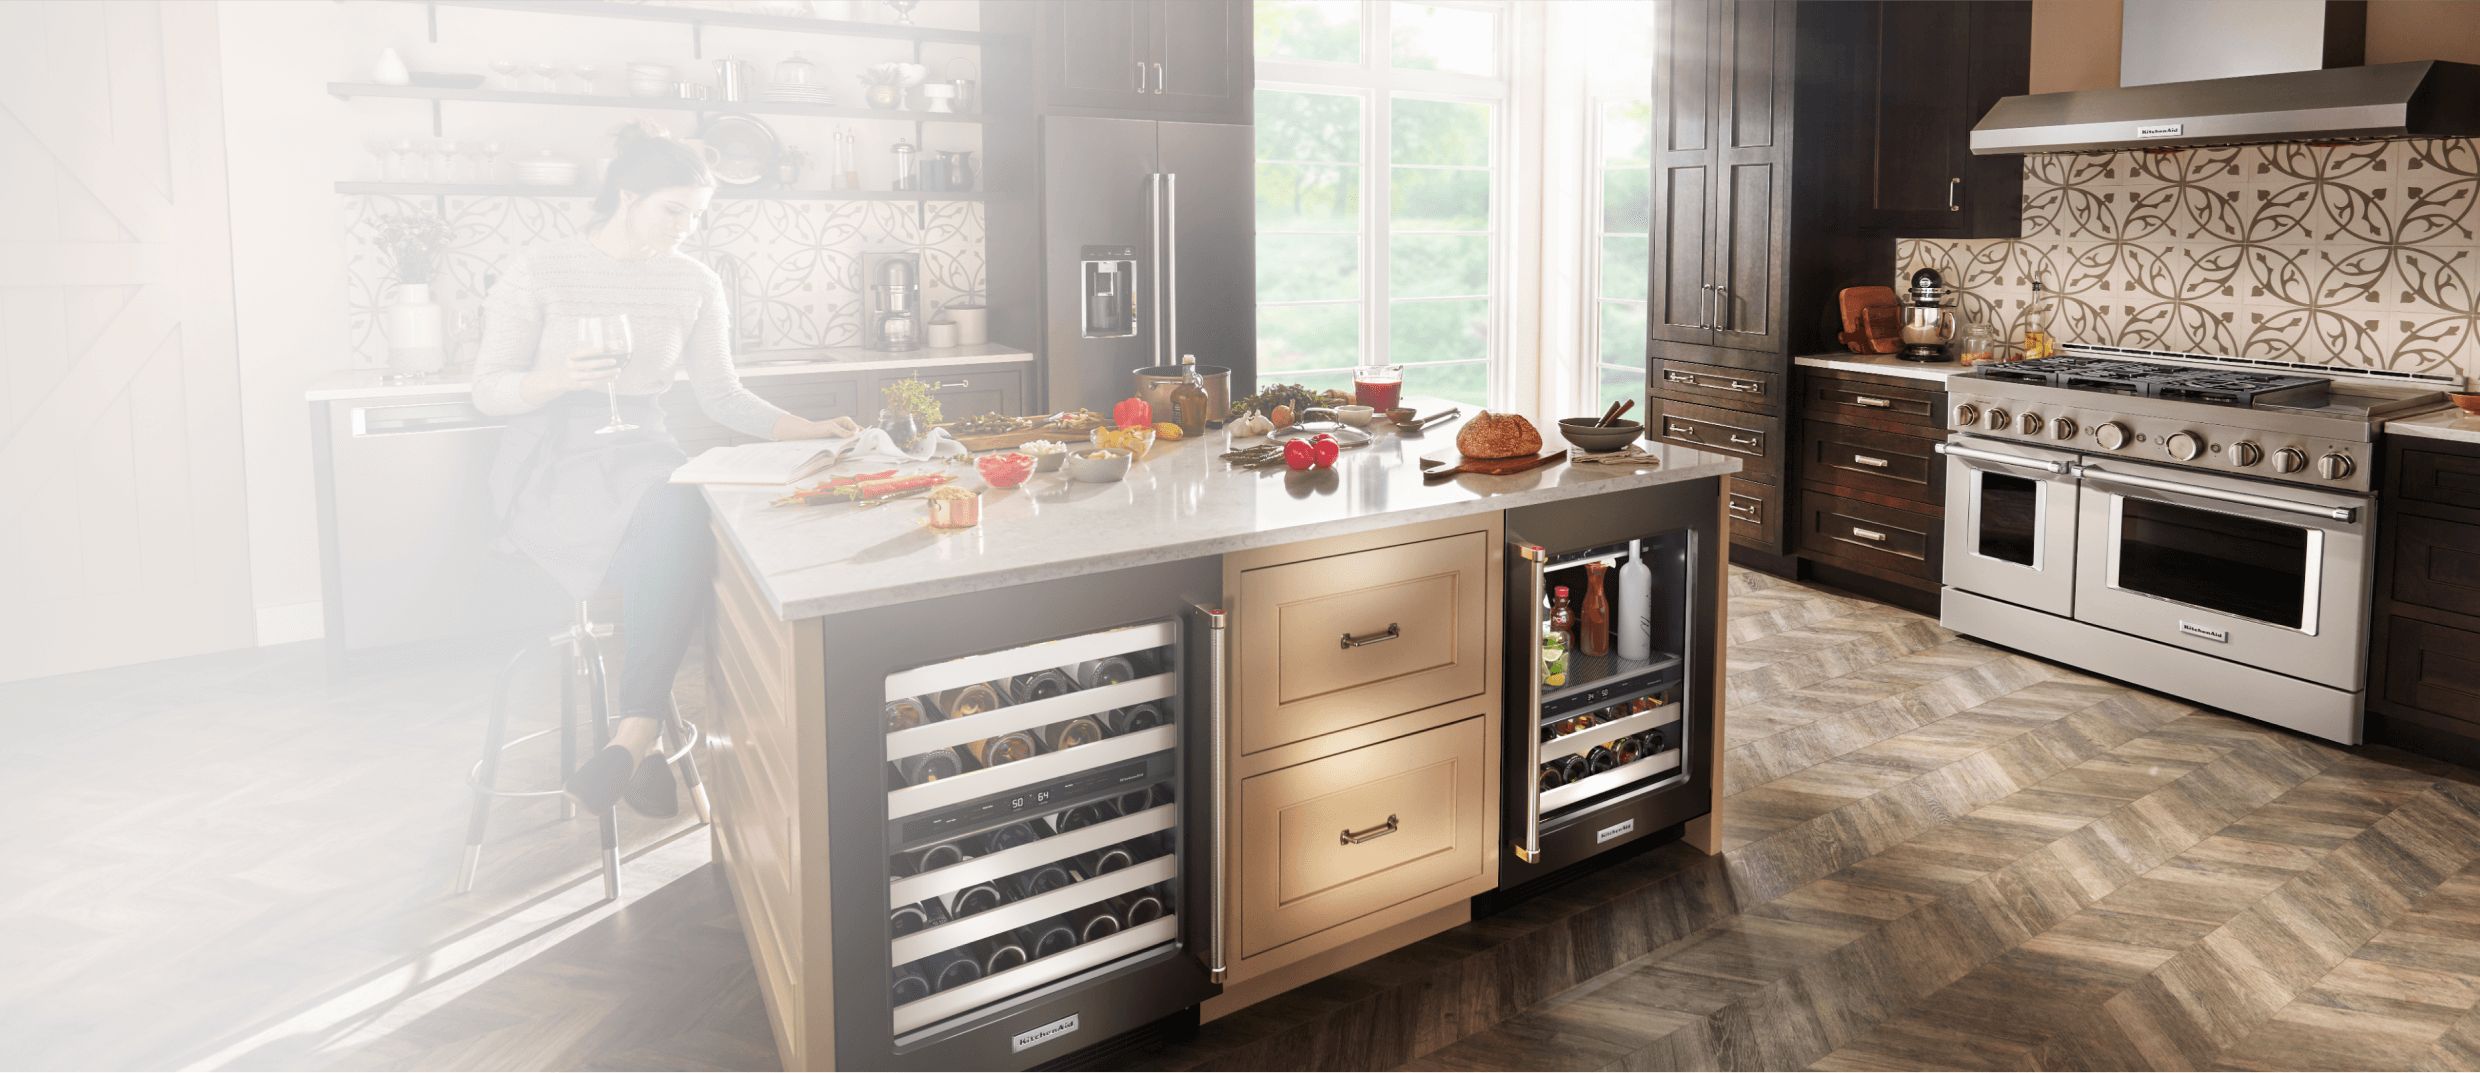 A bold, vibrant kitchen design filled with KitchenAid® appliances.